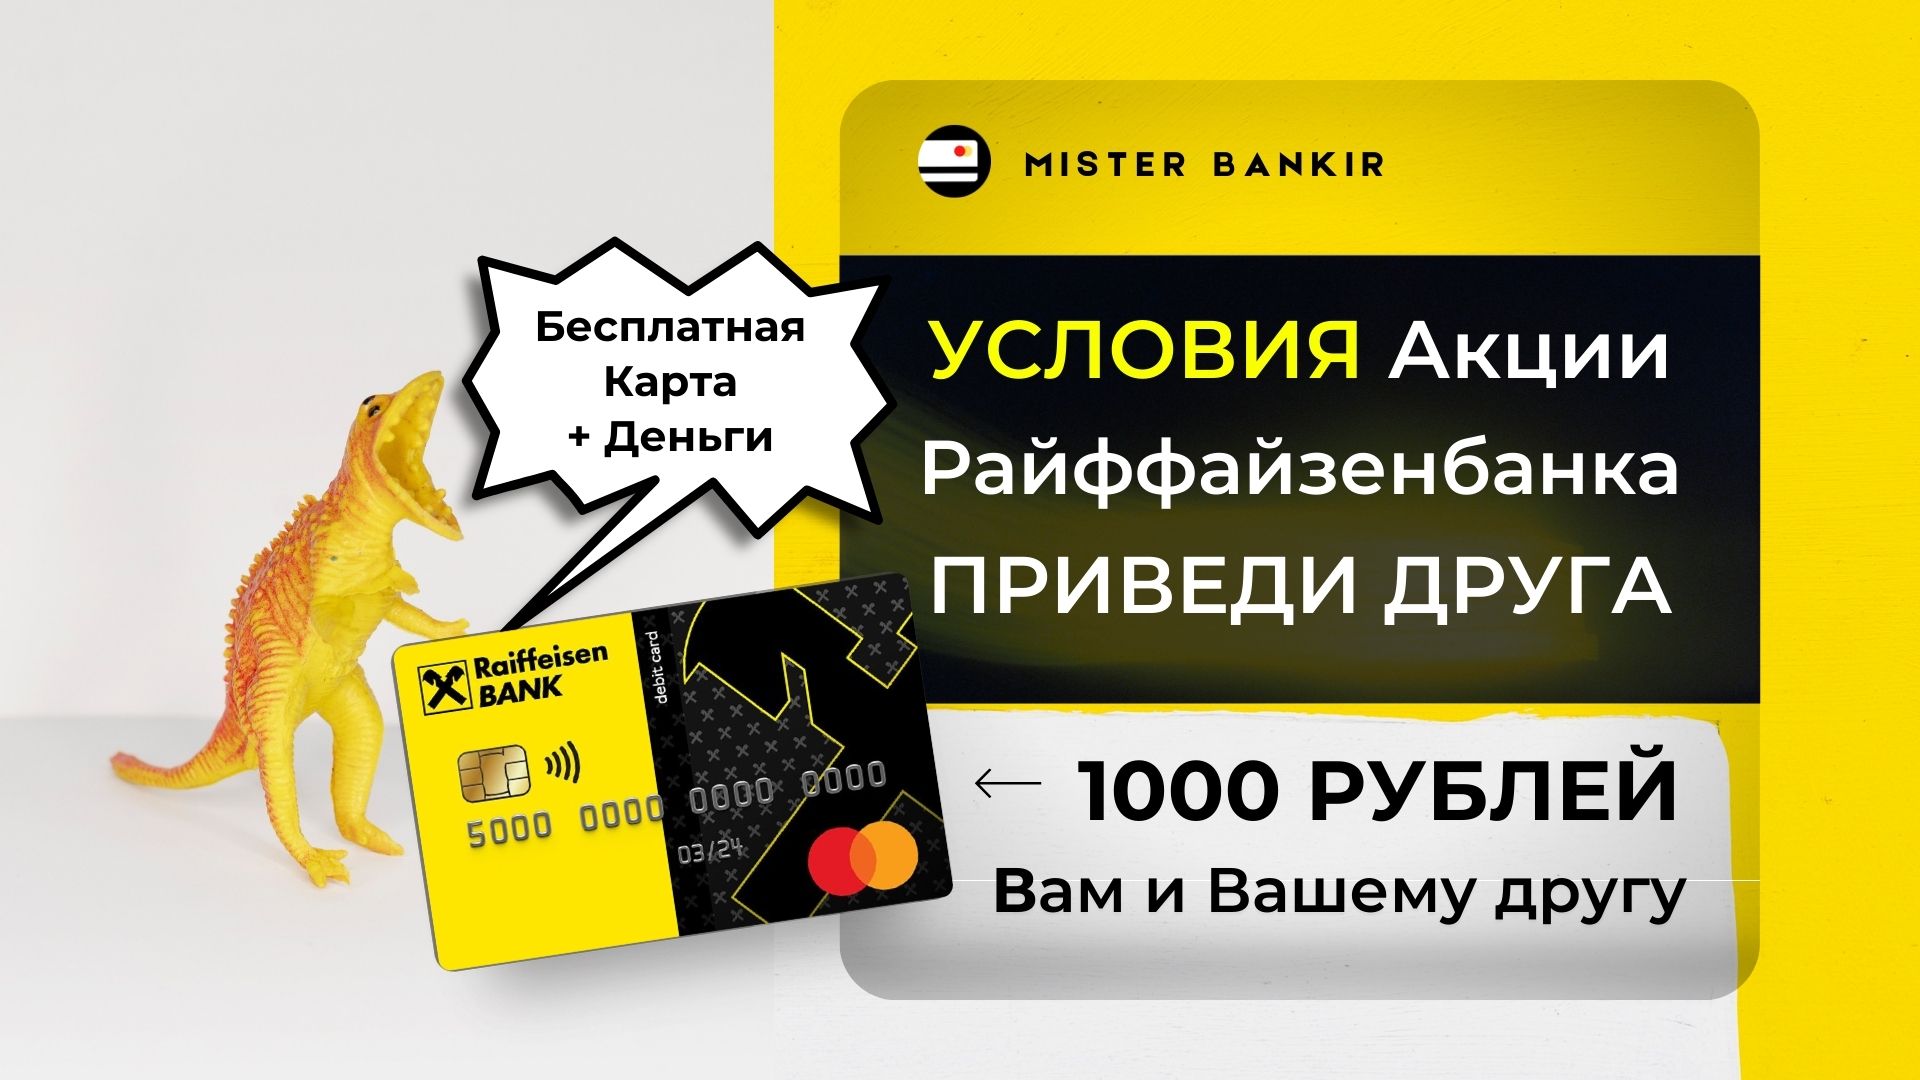 raiffaizenbank privedi druga 1000 rubley uslovia misterbankir